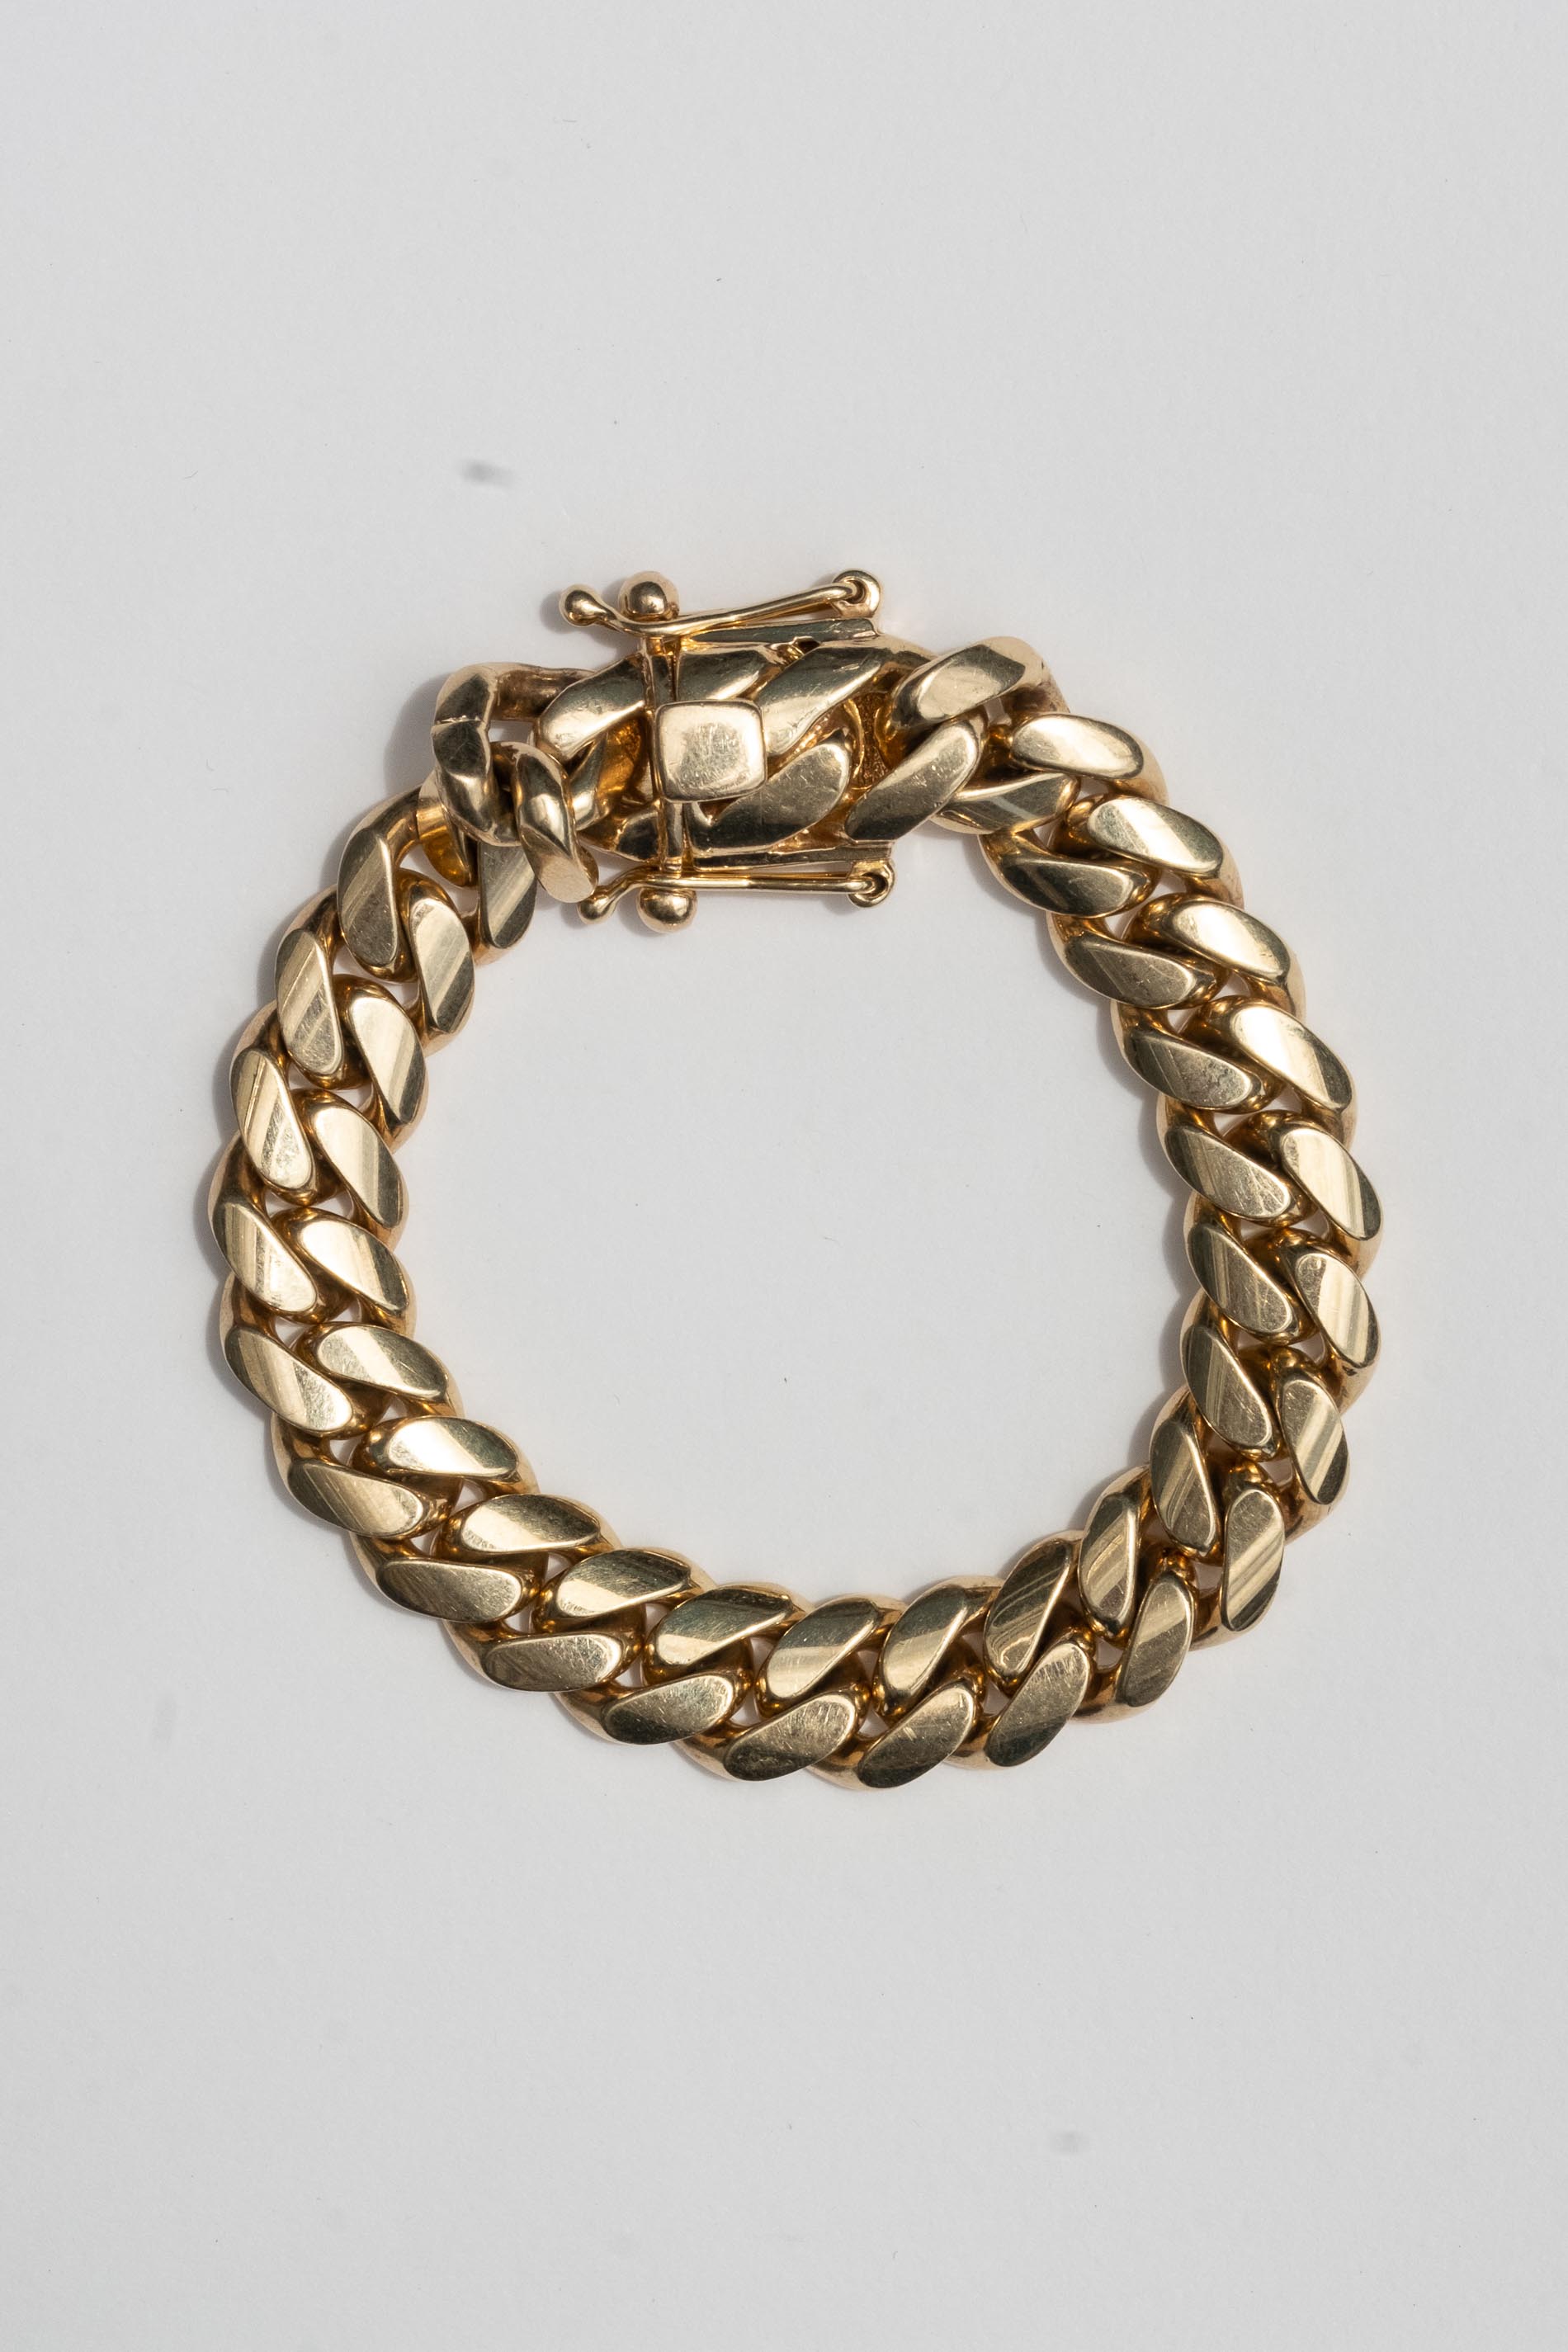 Amazon.com: Nuragold 10k Yellow Gold 7mm Solid Miami Cuban Link Chain  Bracelet, Mens Jewelry Box Clasp 7